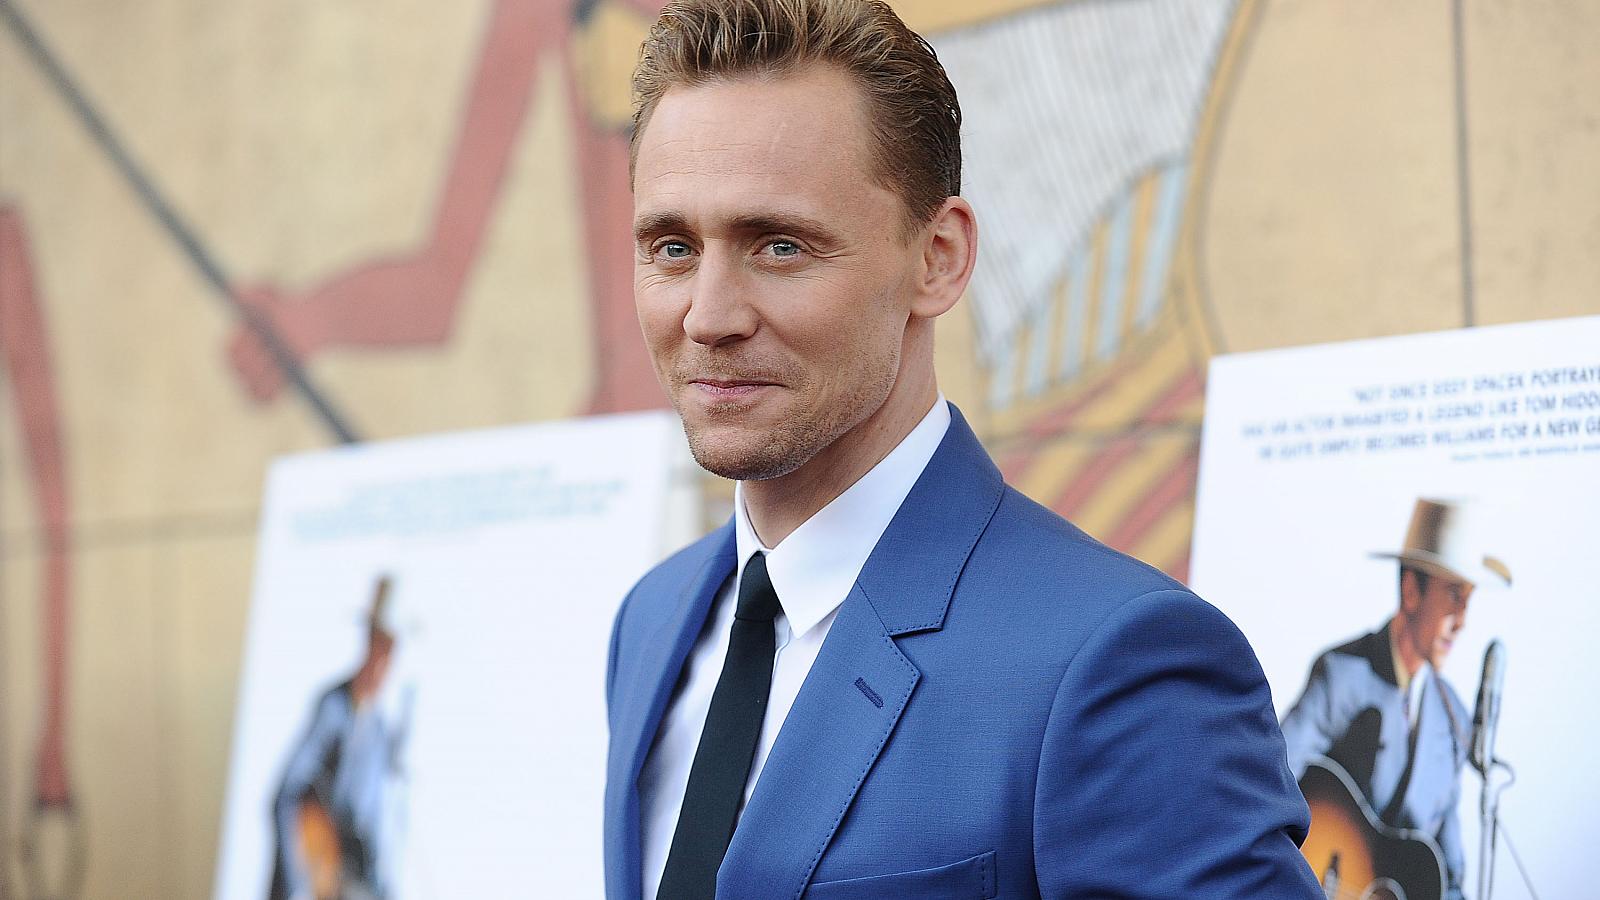 Tom Hiddleston's Centrum ad raises eyebrows and sparks parodies